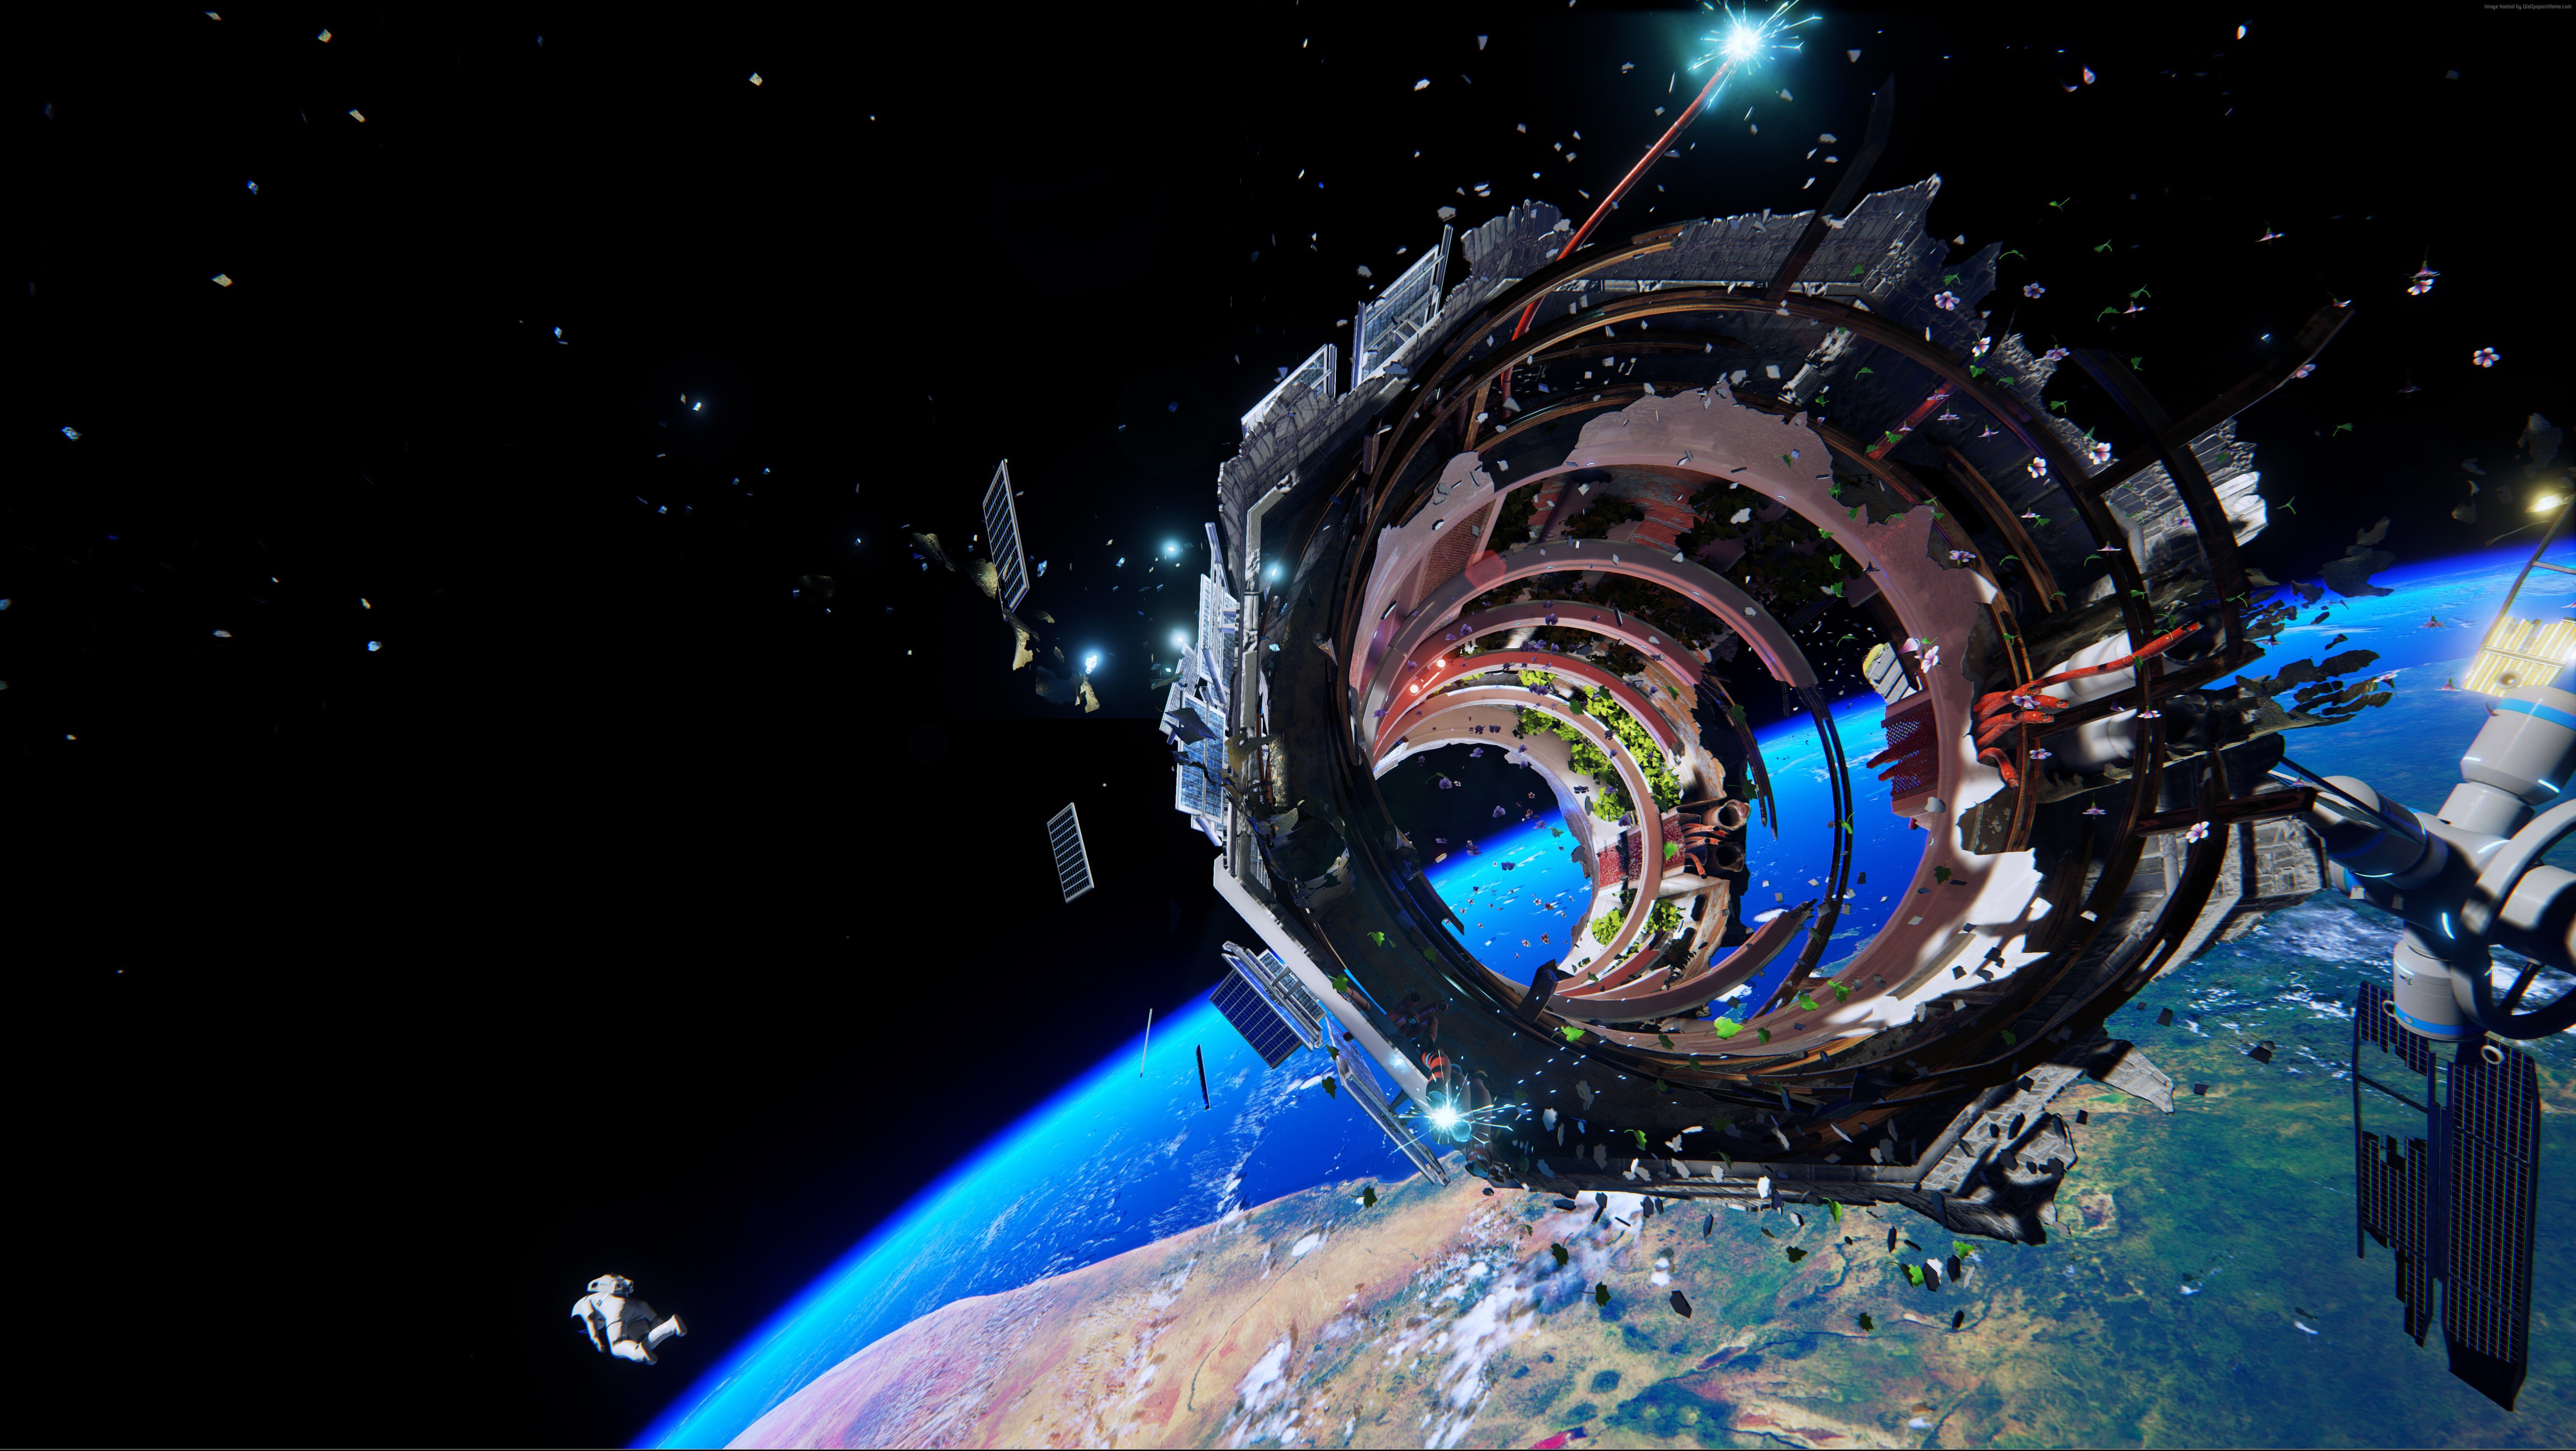 HD wallpaper: Star Citizen, 5k, 4k wallpaper, 8k, game, space simulator,  battle